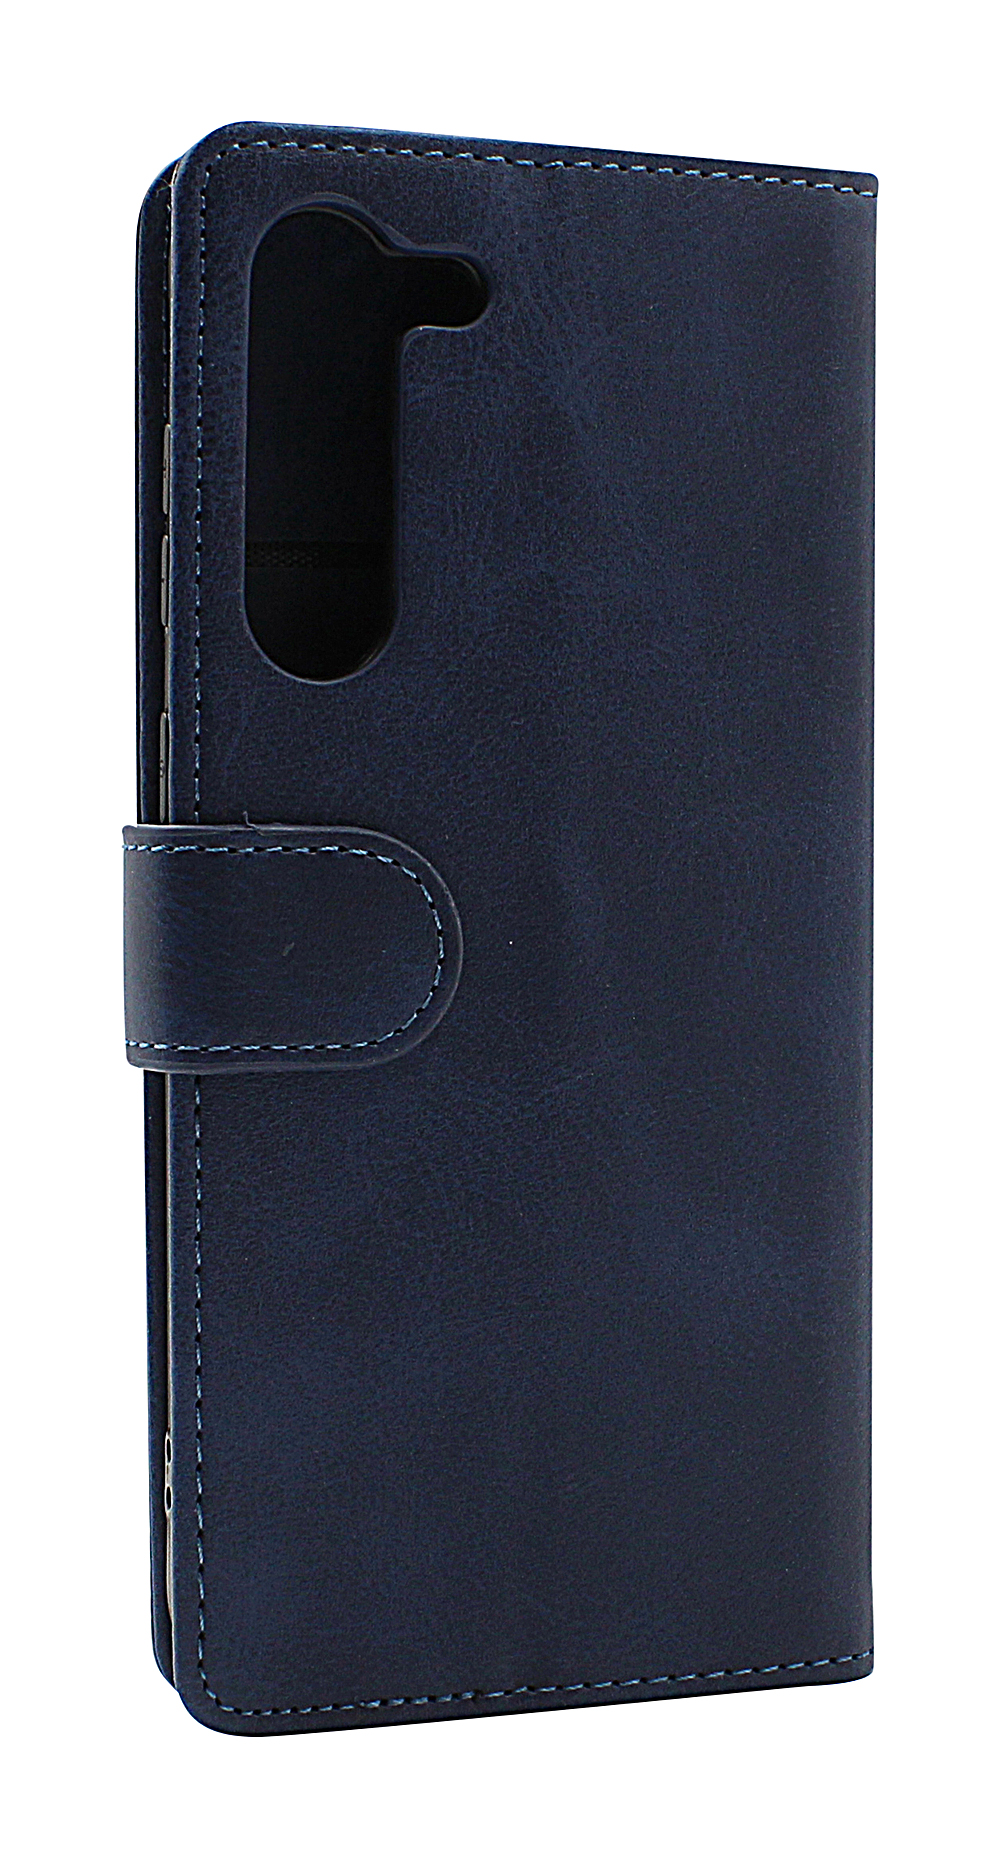 billigamobilskydd.seZipper Standcase Wallet Samsung Galaxy S23 Plus 5G